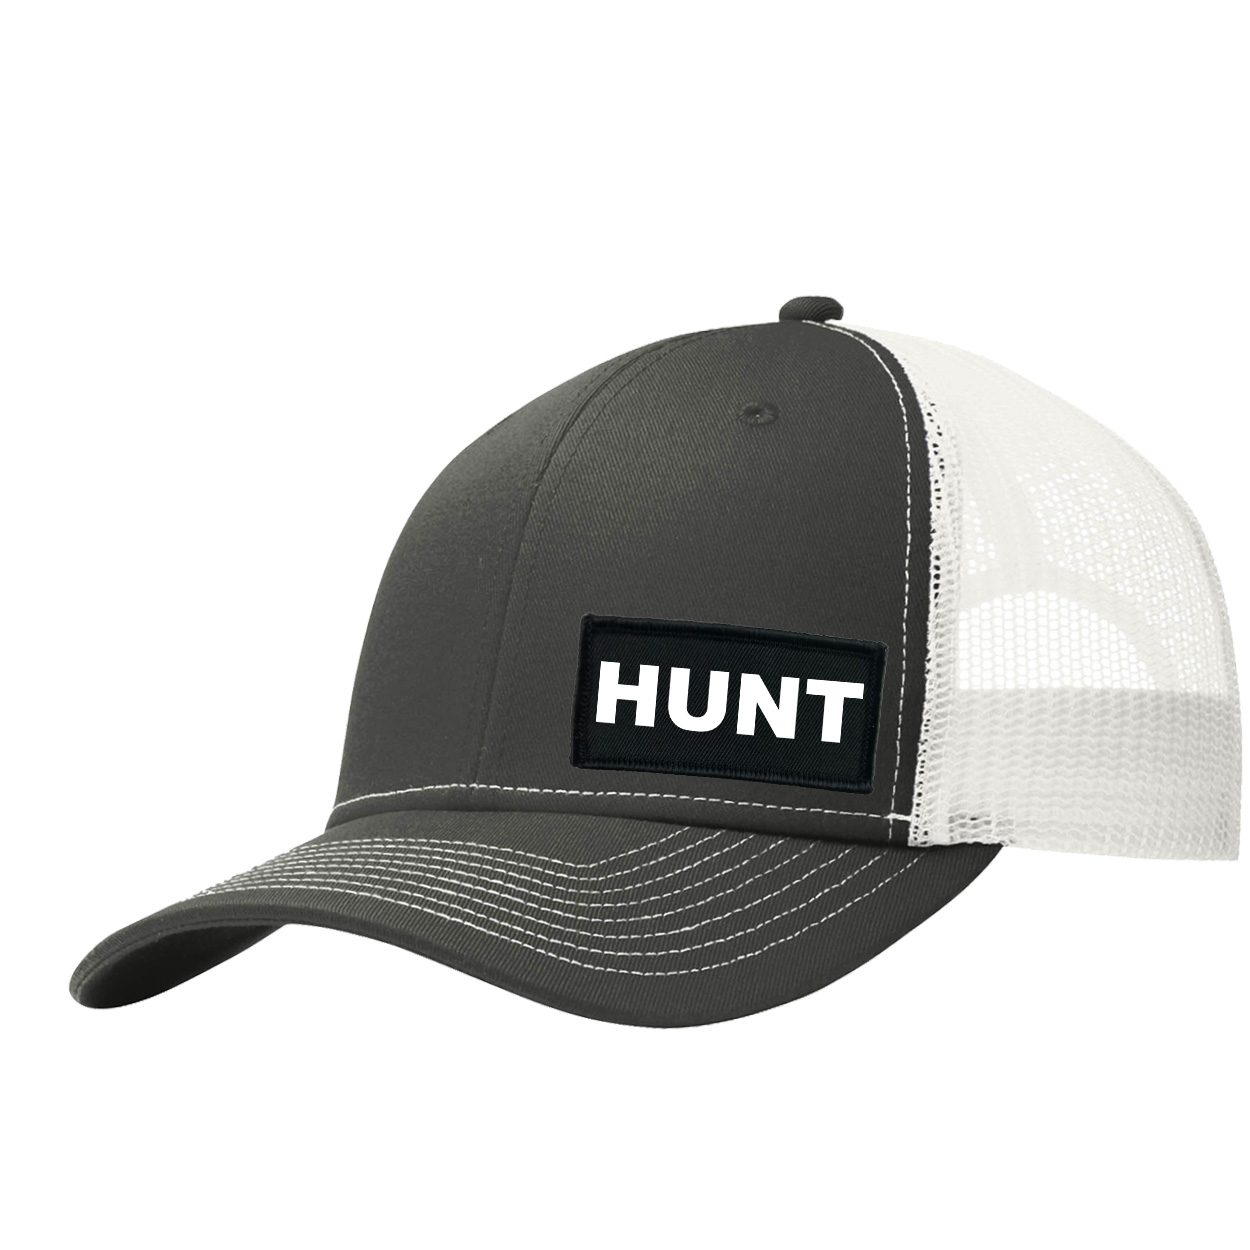 Hunt Brand Logo Night Out Woven Patch Snapback Trucker Hat Dark Gray/White (White Logo)